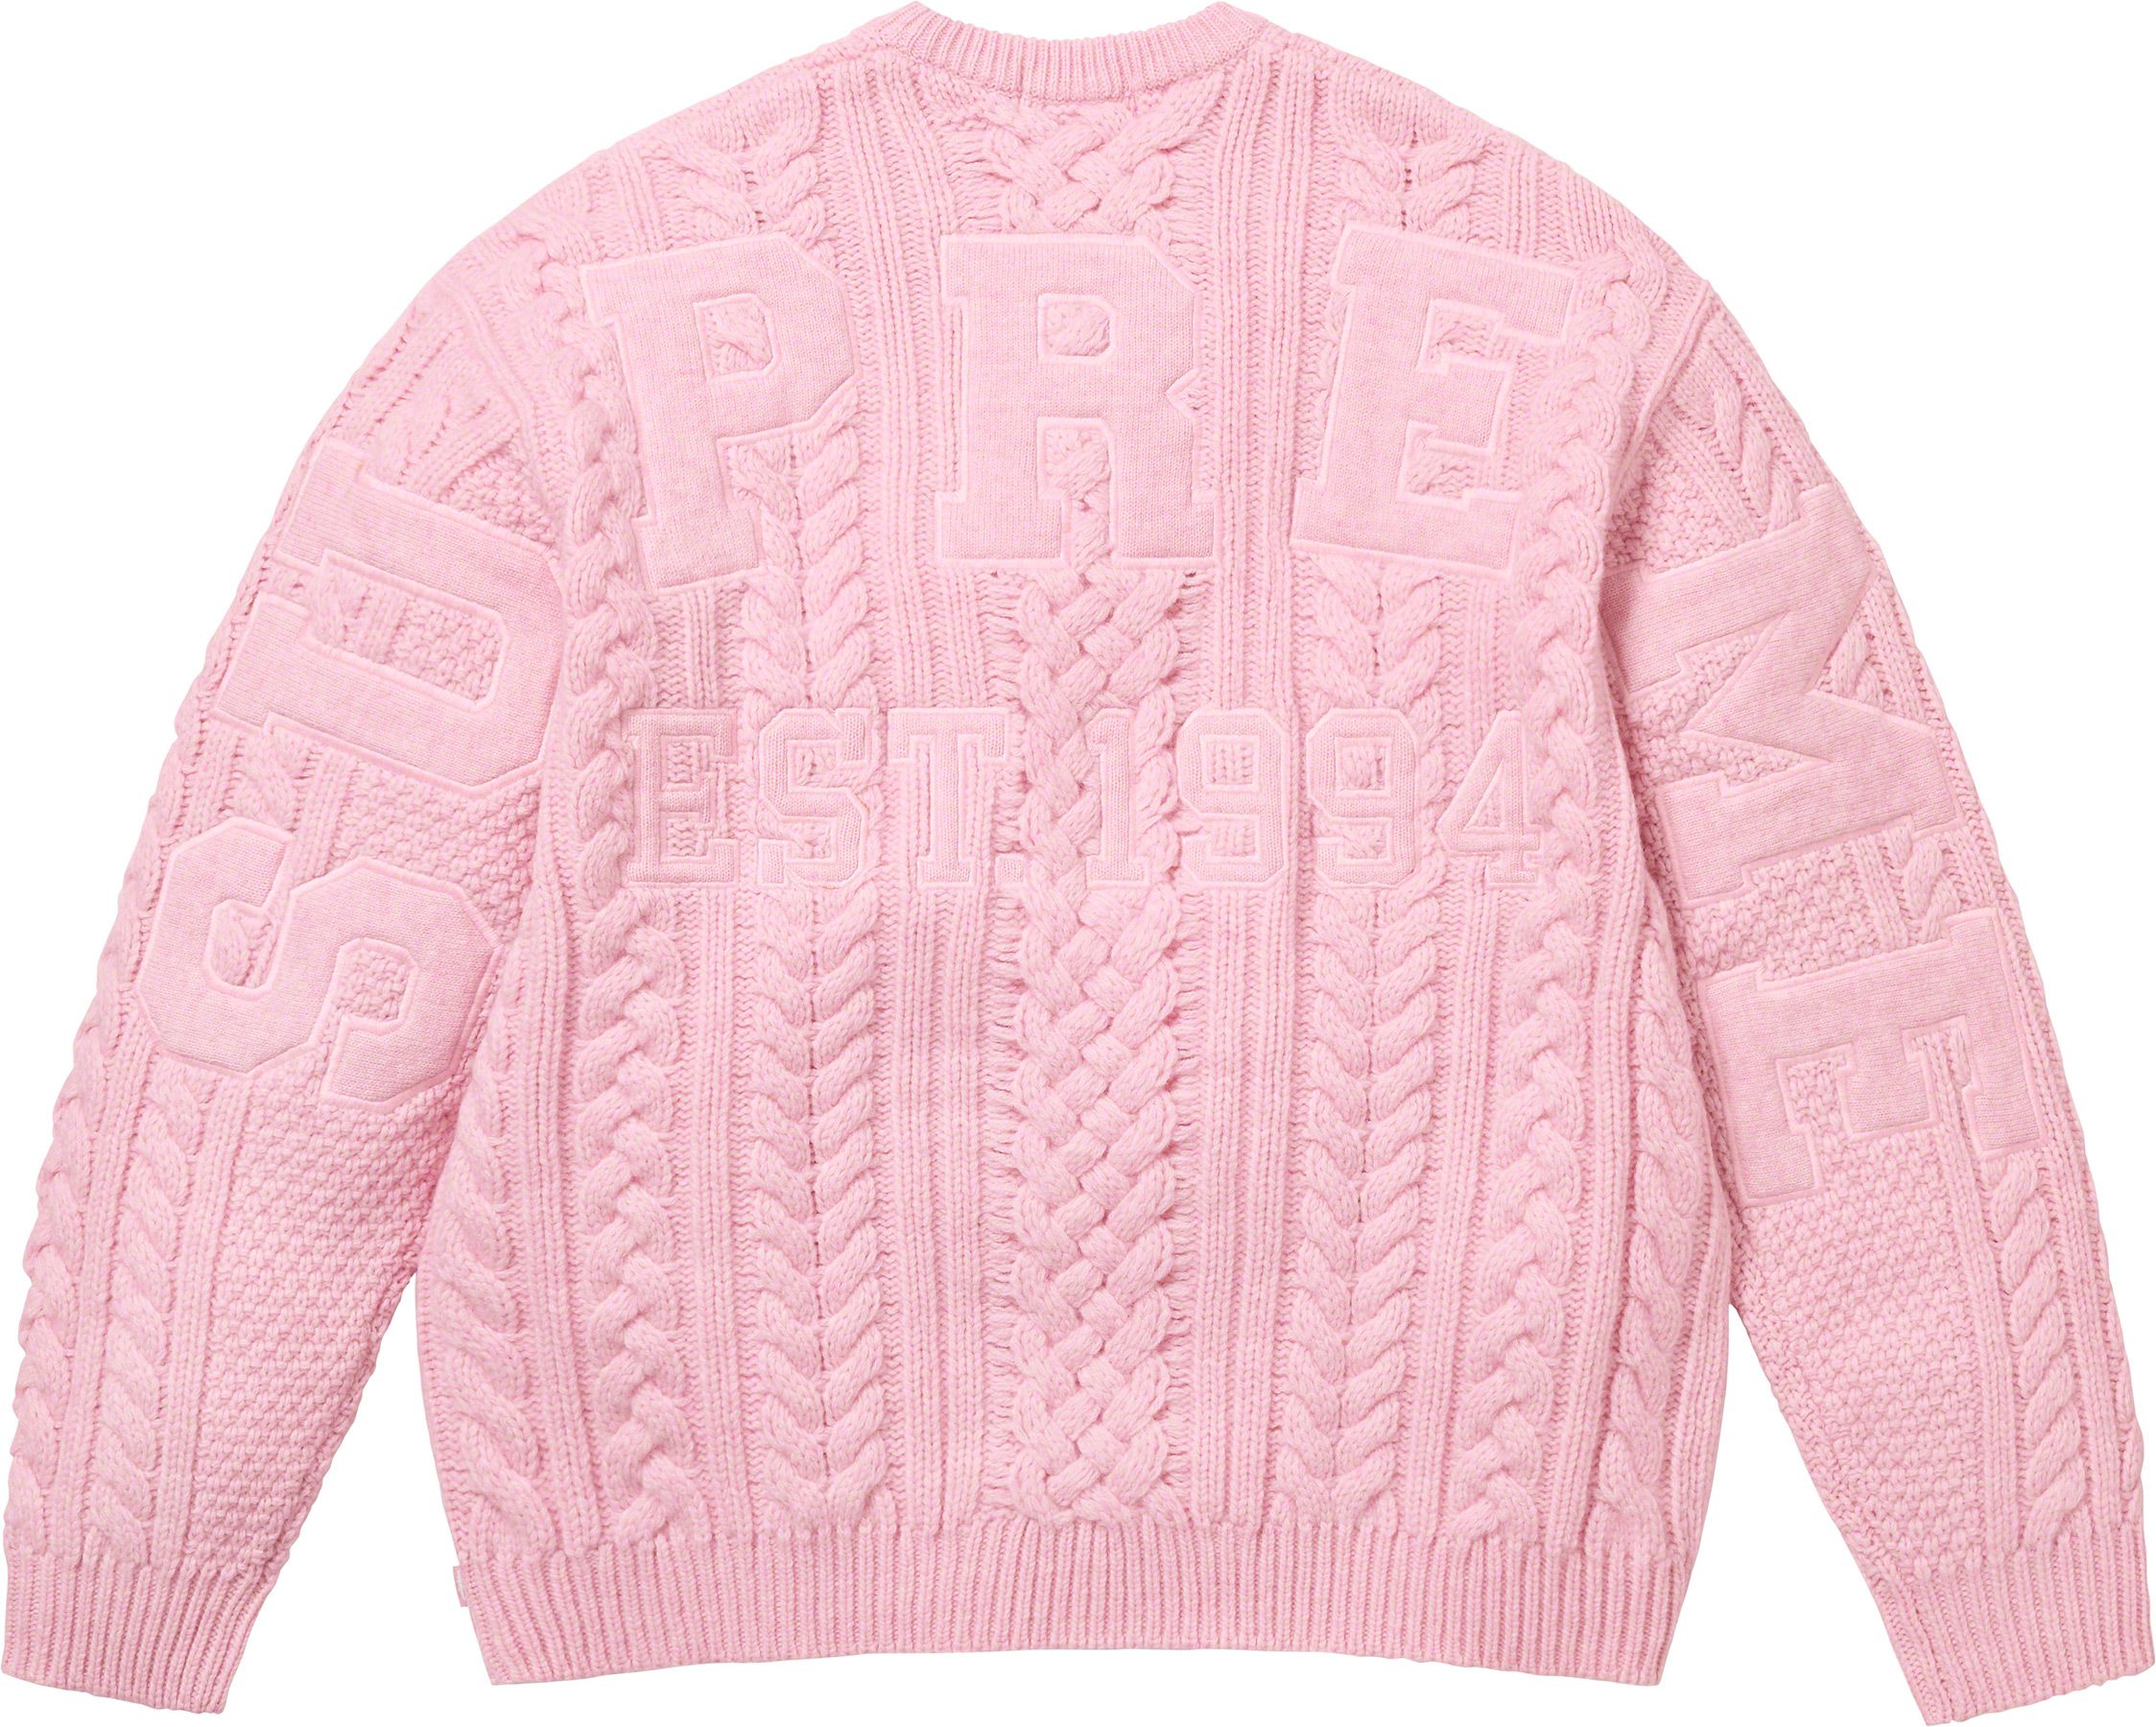 Supreme : Applique Cable Knit Sweater★M